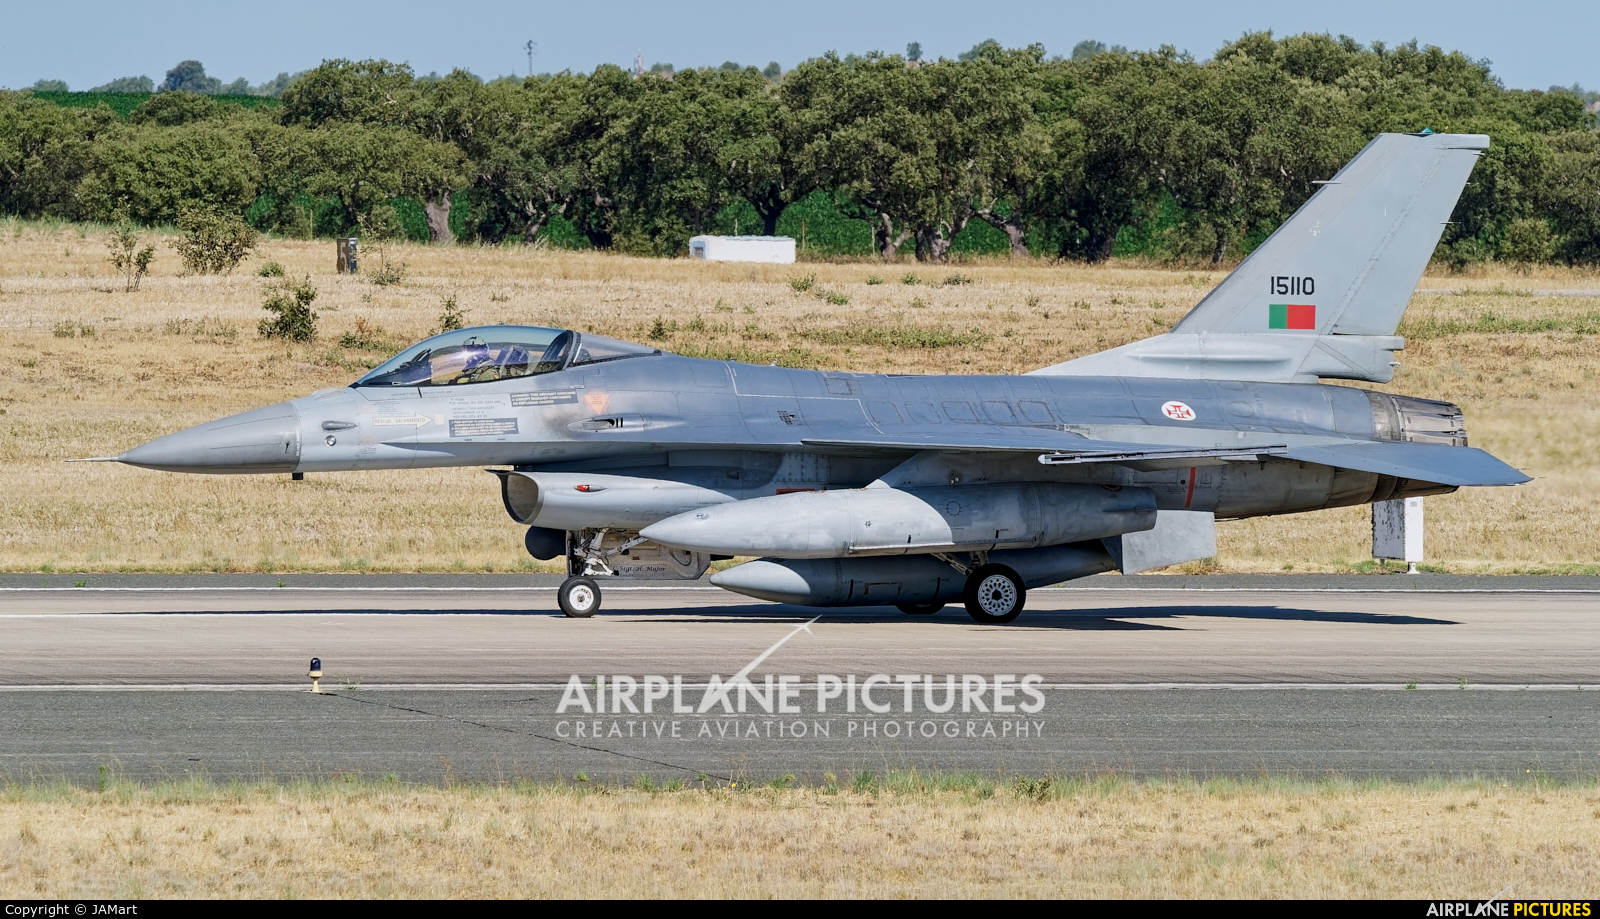 Portugal - Air Force 15110 aircraft at Beja AB